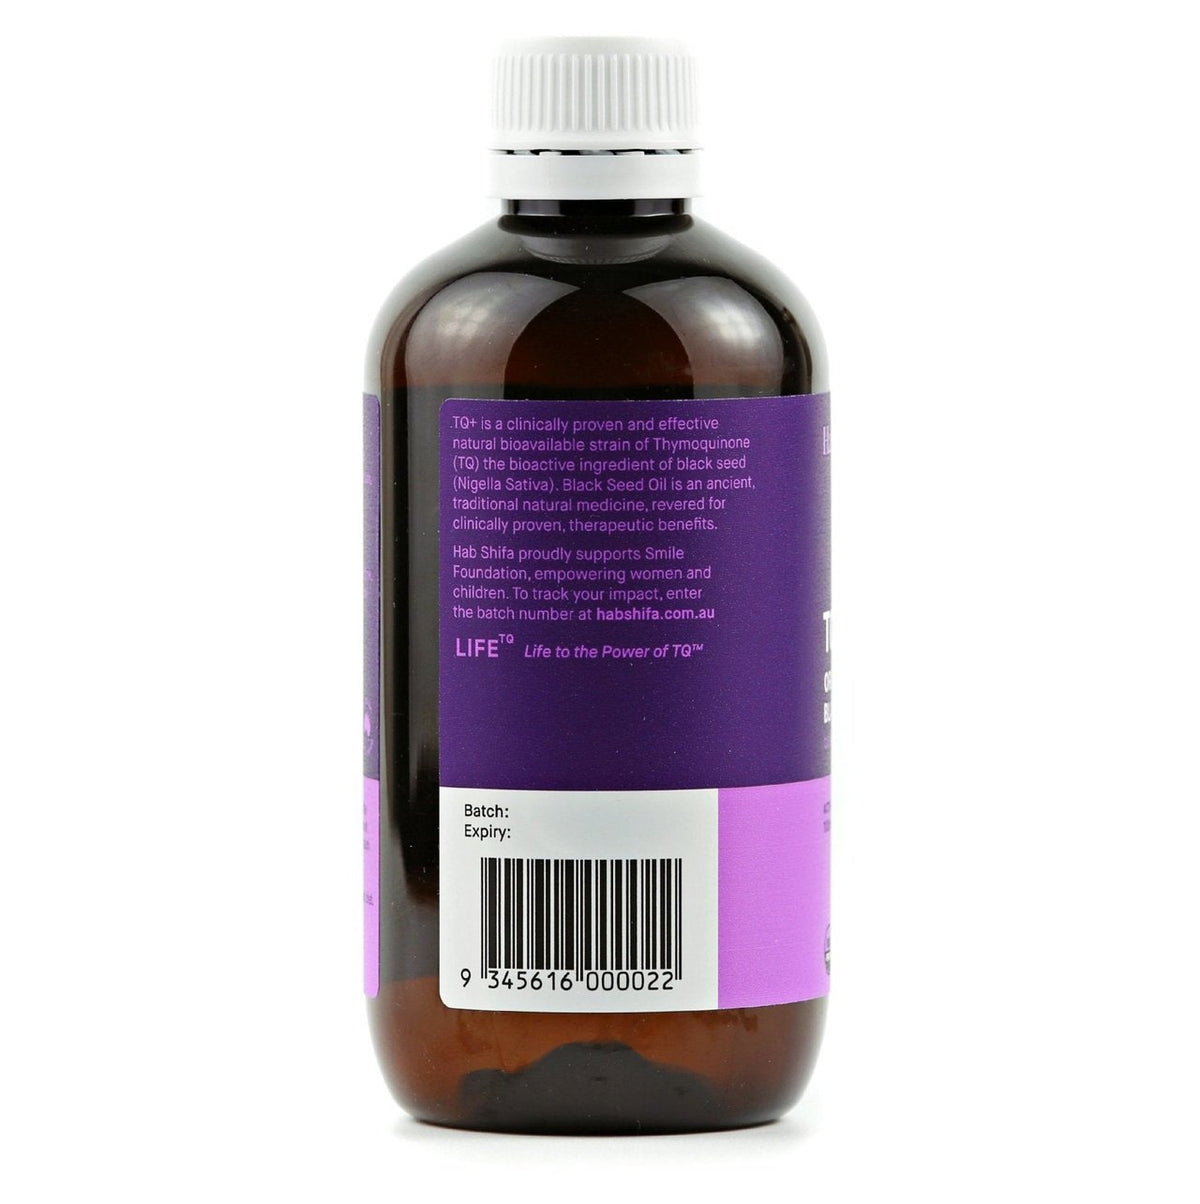 Hab Shifa Black Seed Oil 250ml